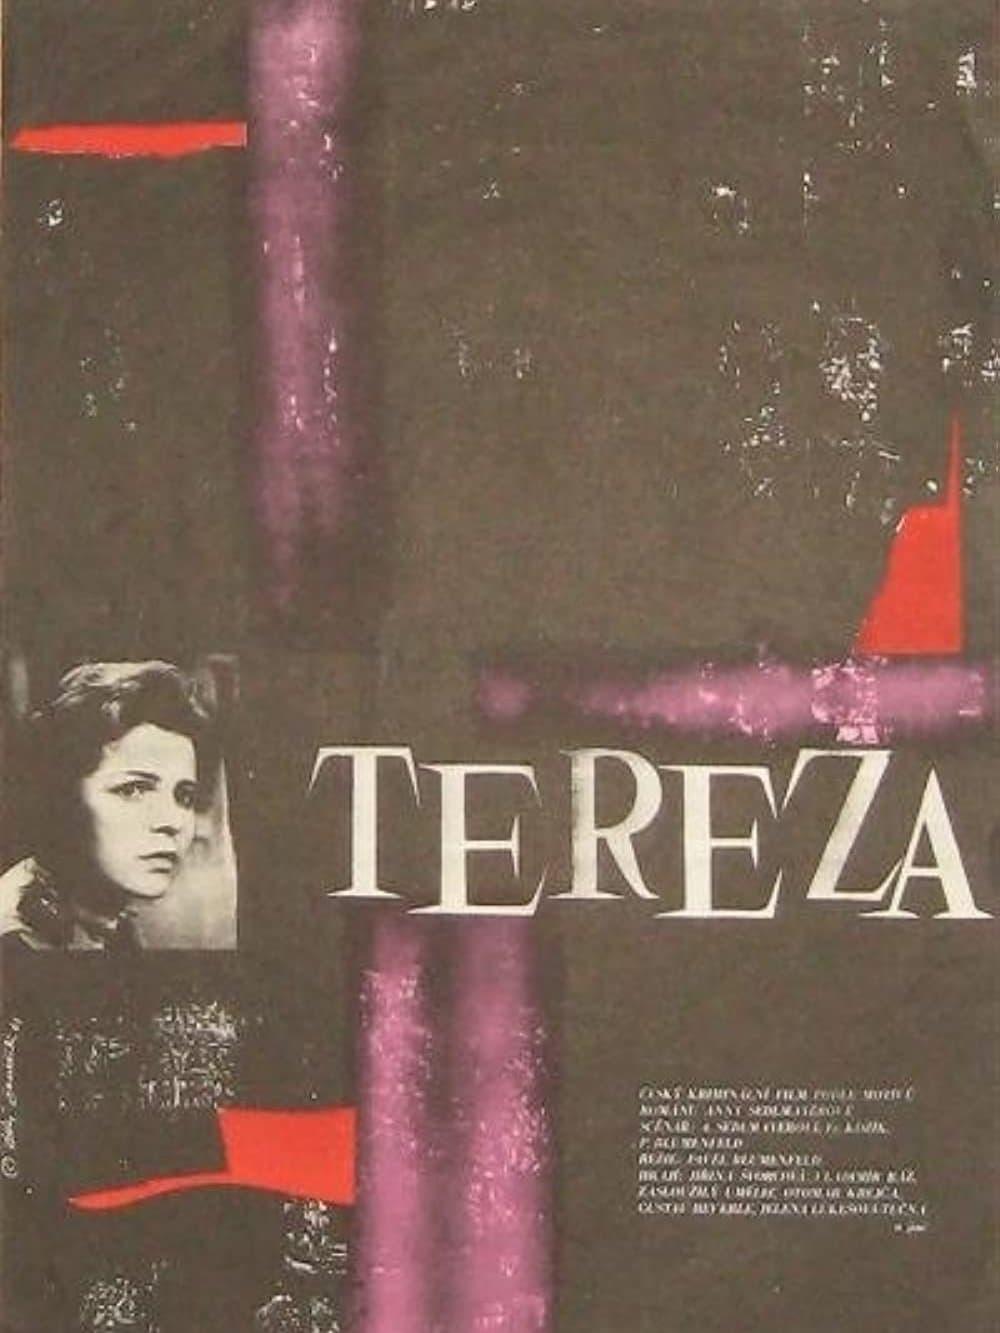 Tereza poster